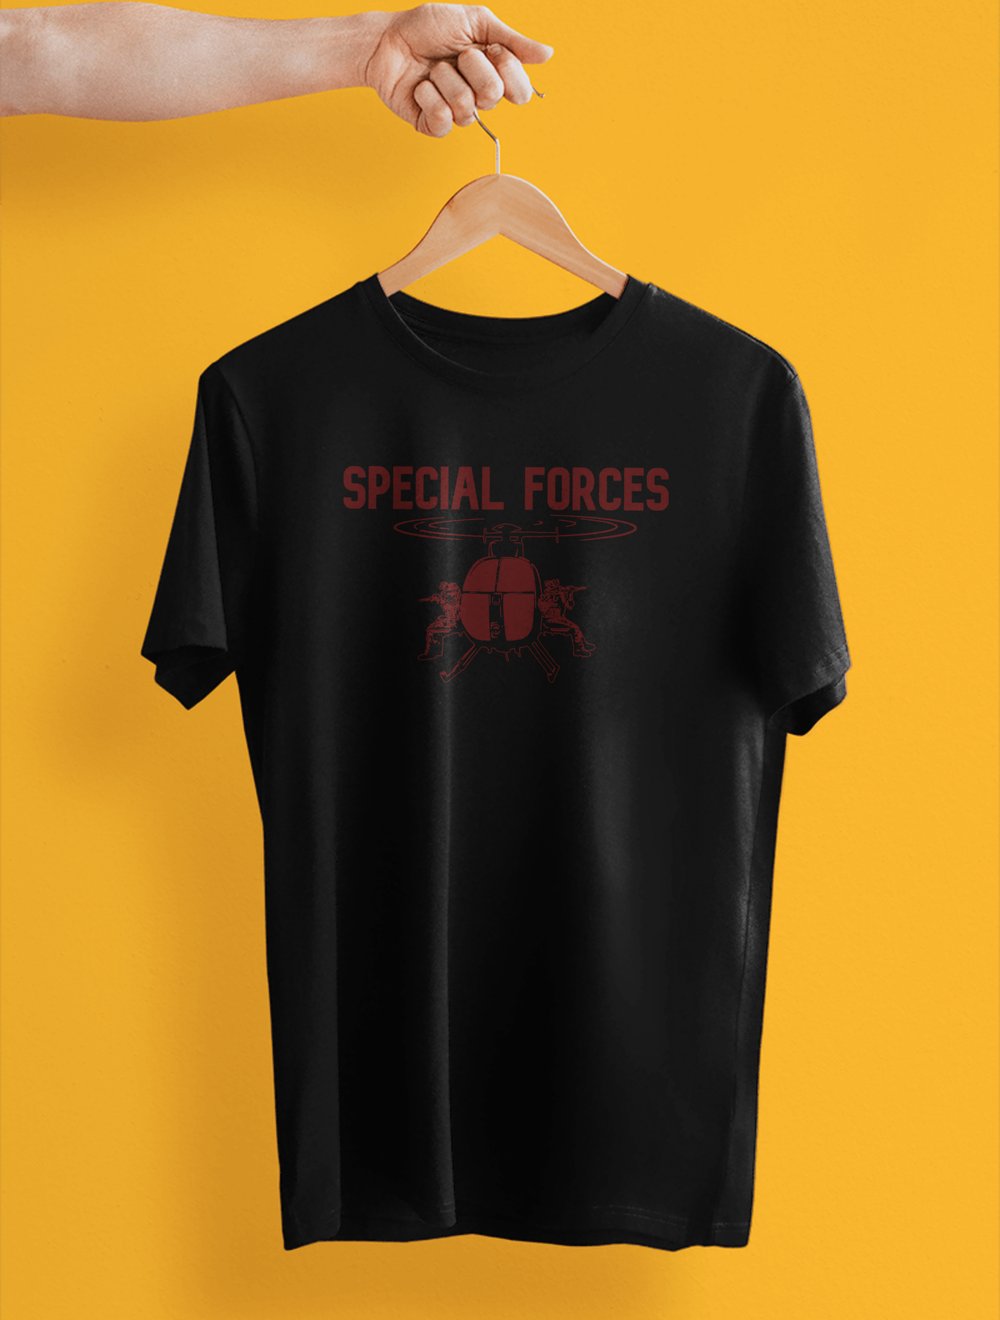 SPECIAL FORCES BORDO